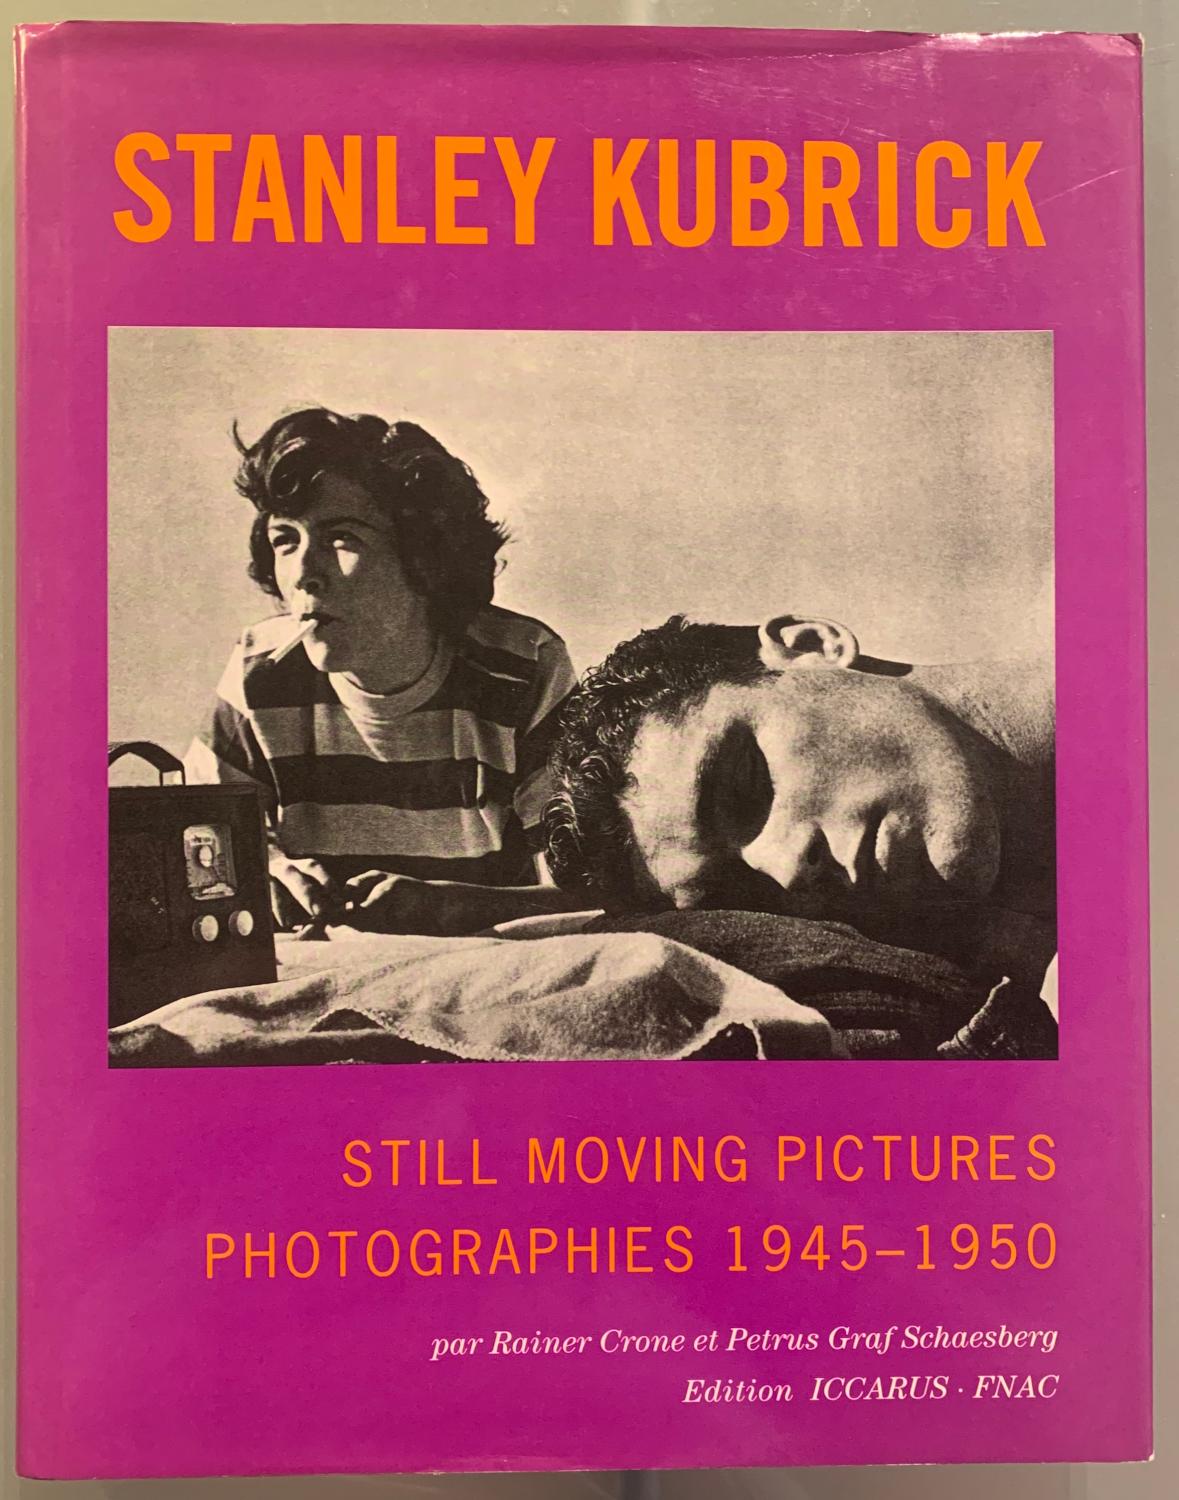 STANLEY KUBRICK, STILL MOVING PICTURES PHOTOGRAPHIES 1945-1950 - Rainer CRONE, Petrus GRAF SCHAESBERG